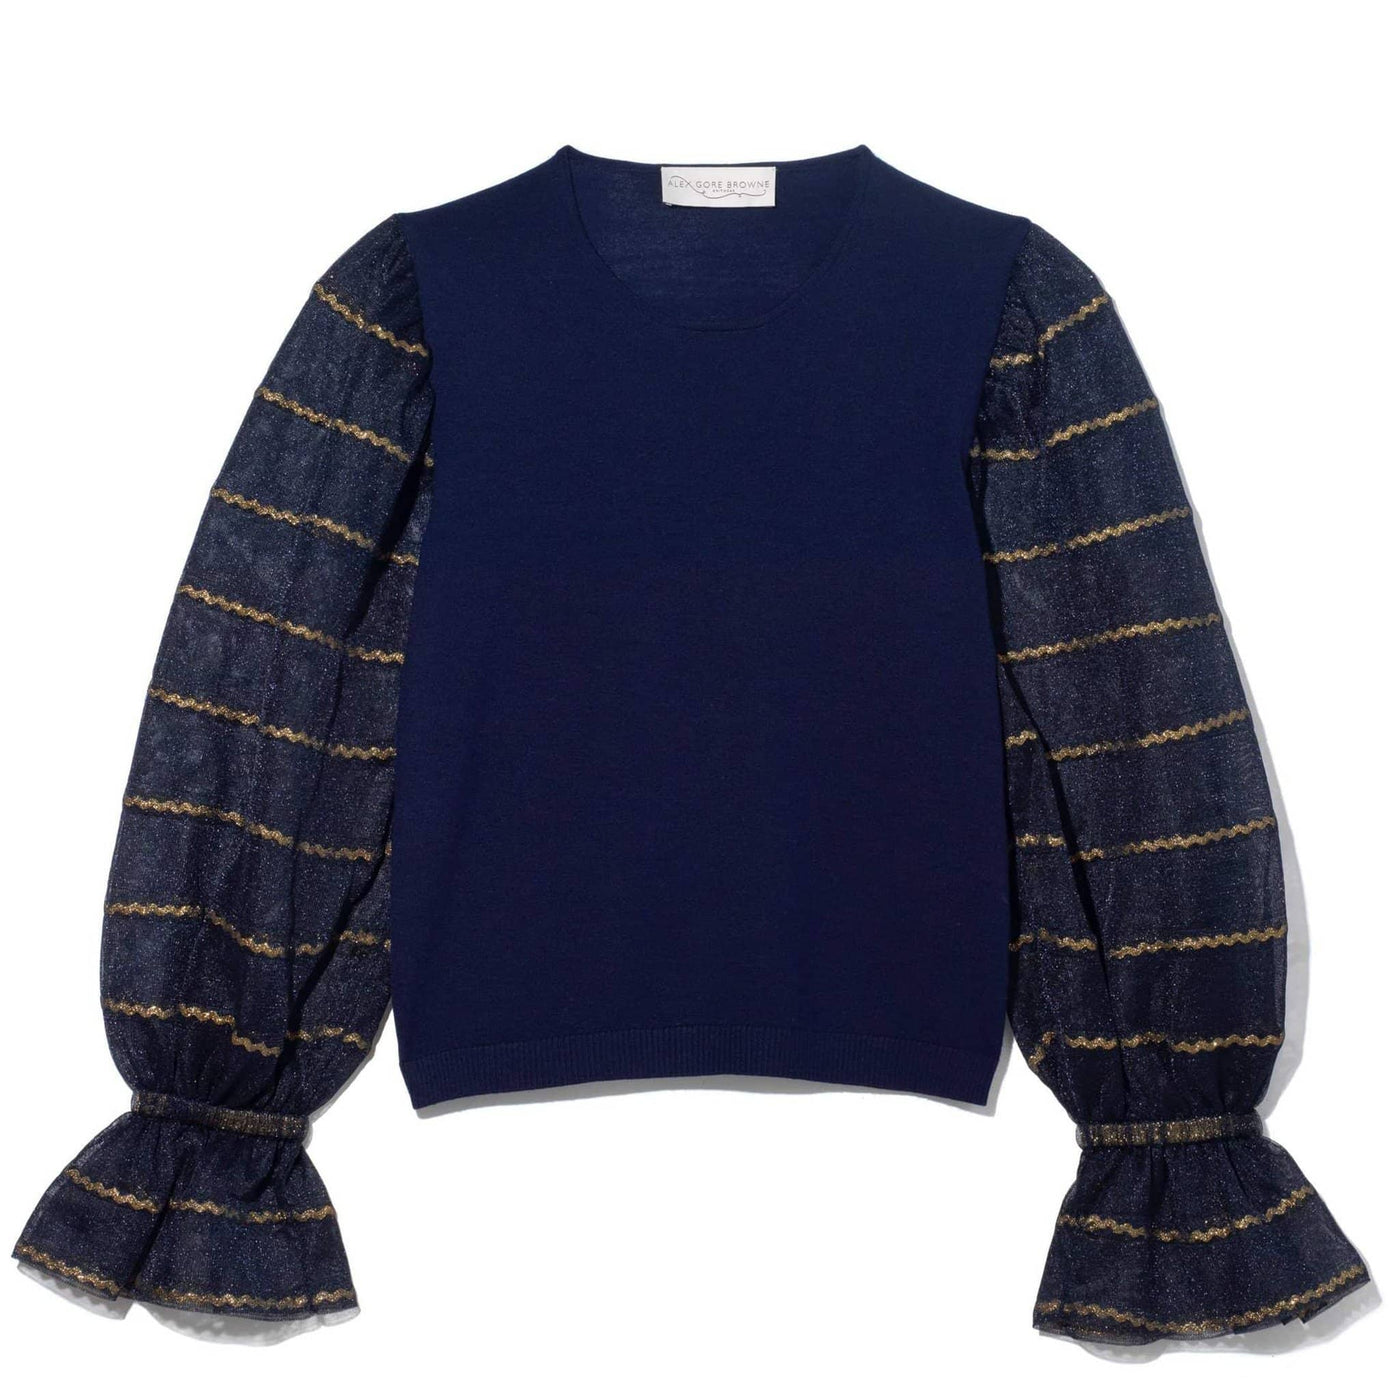 Navy Carousel Sweater - Ric Rac Ribbon stripe